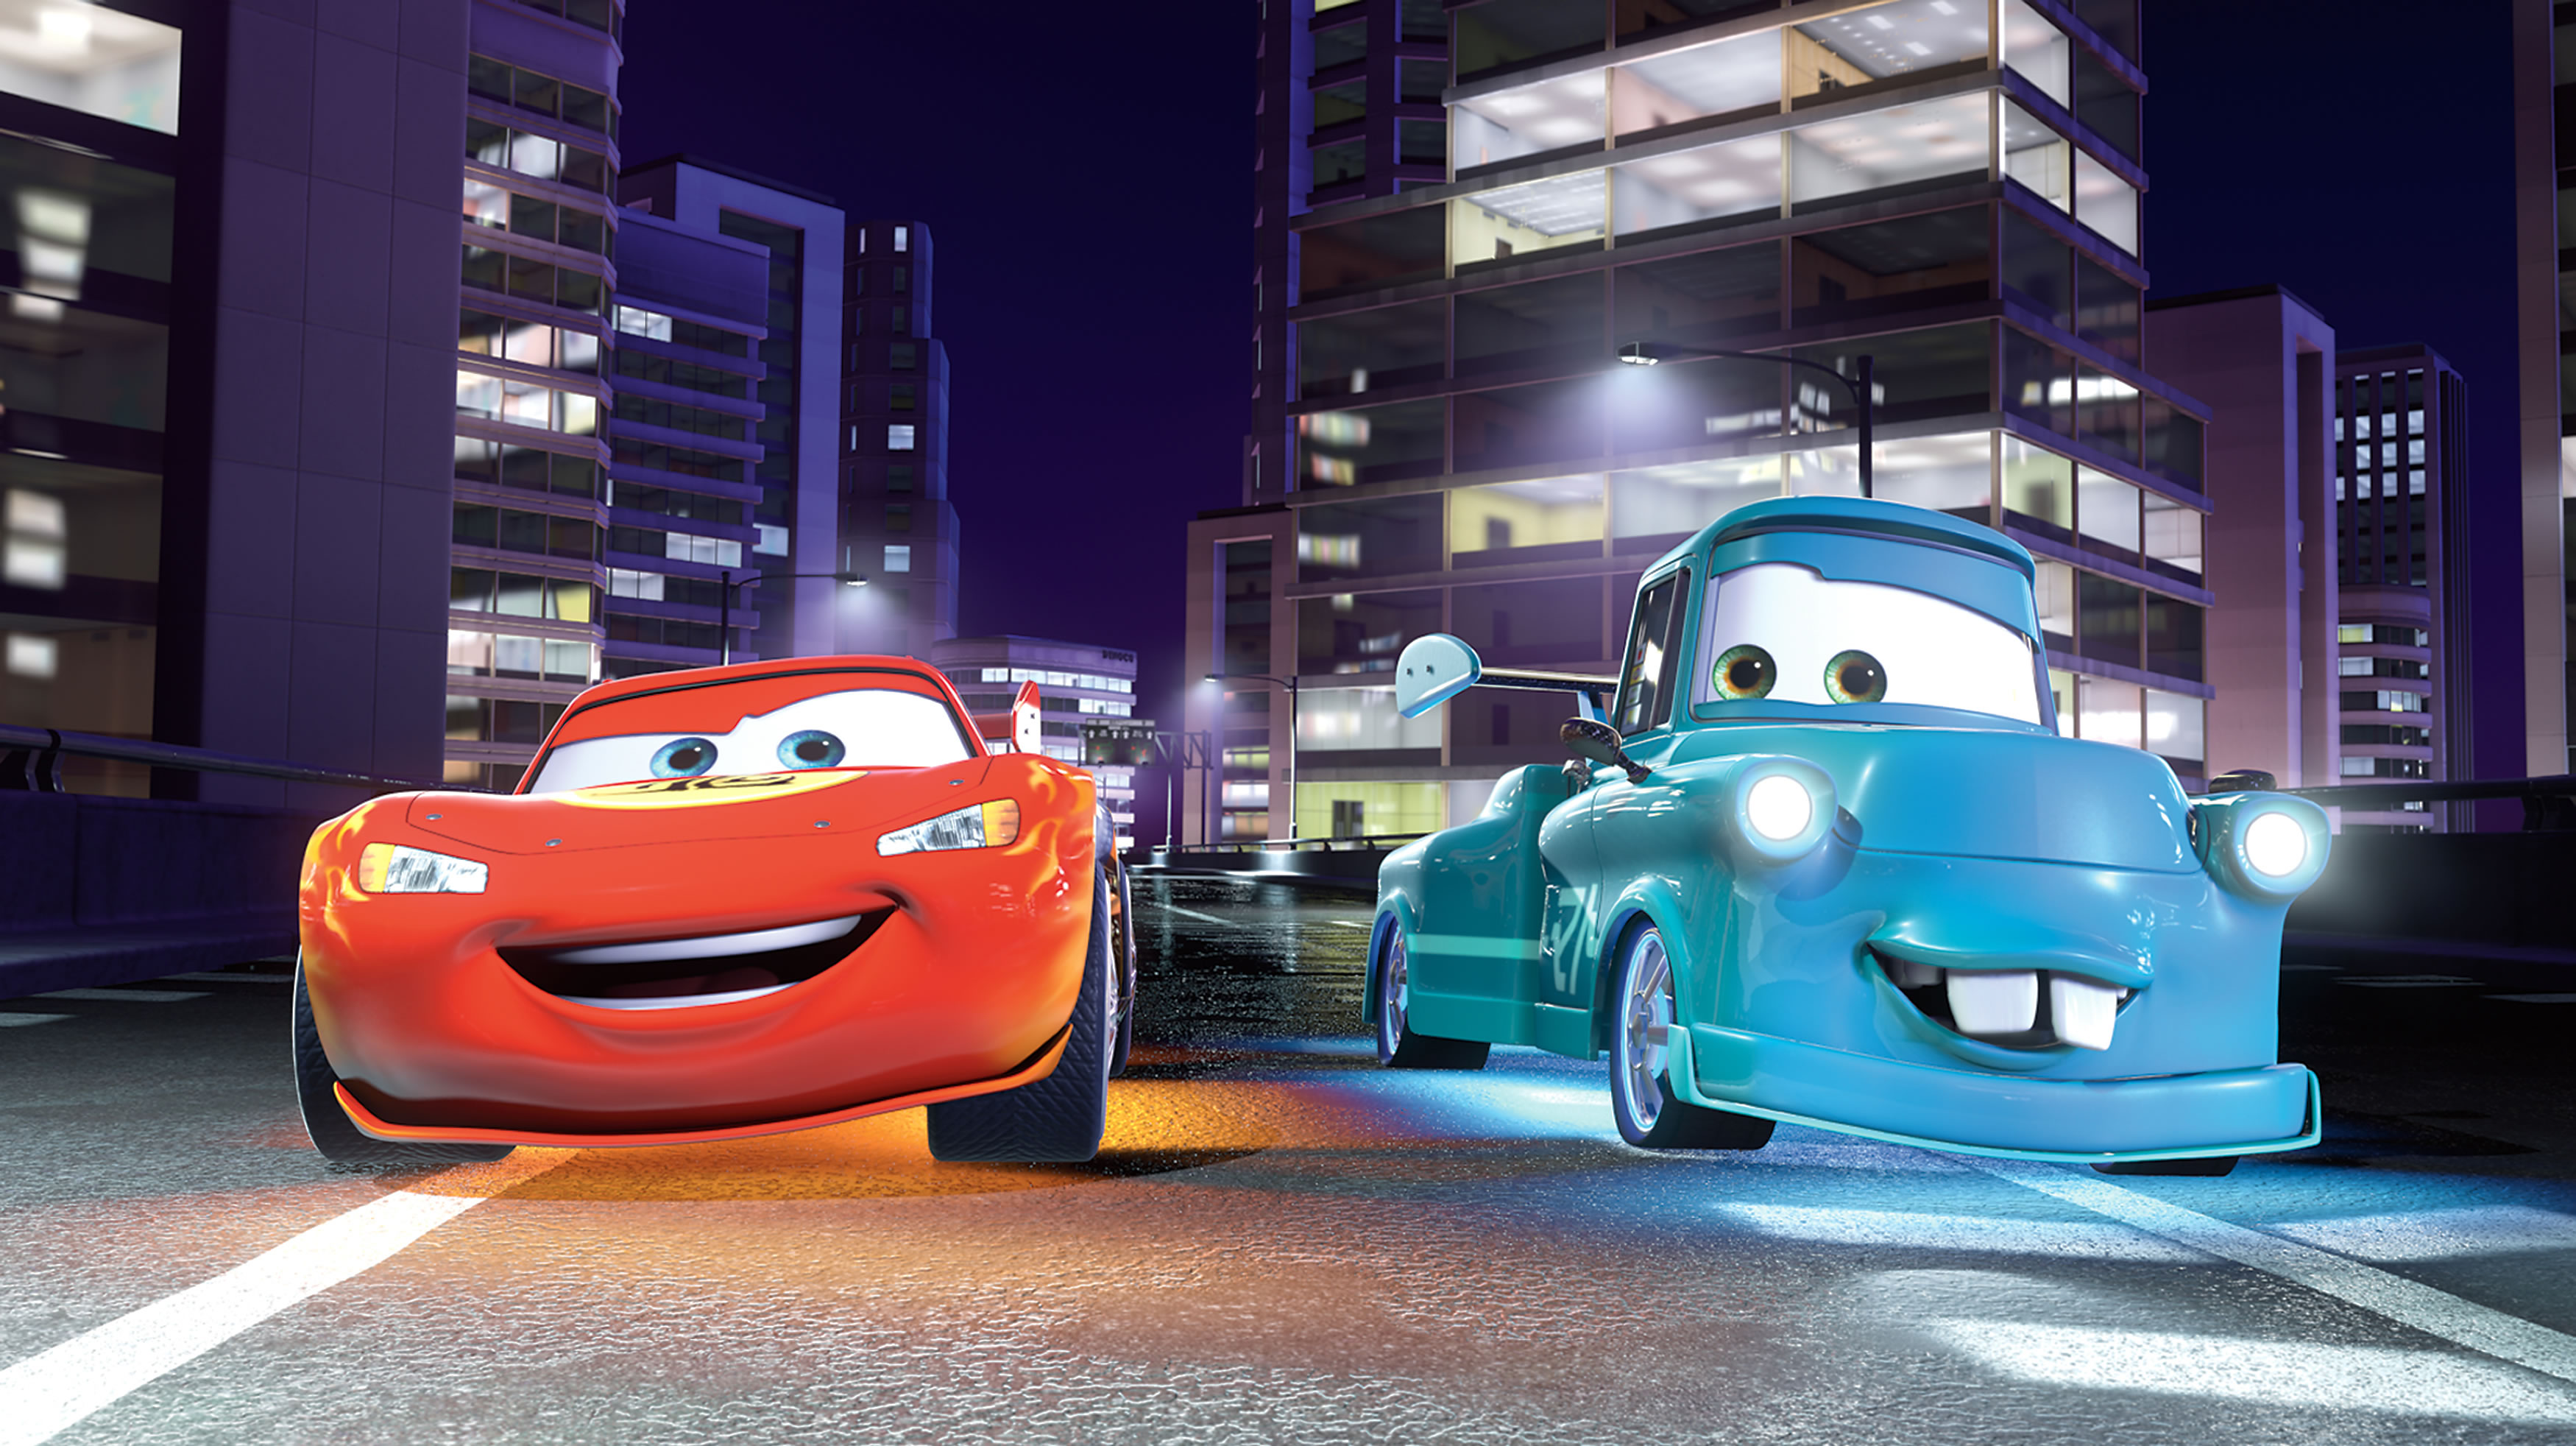 Descarga gratuita de fondo de pantalla para móvil de Cars Toons: Cuentos Fantásticos De Mater, Películas.